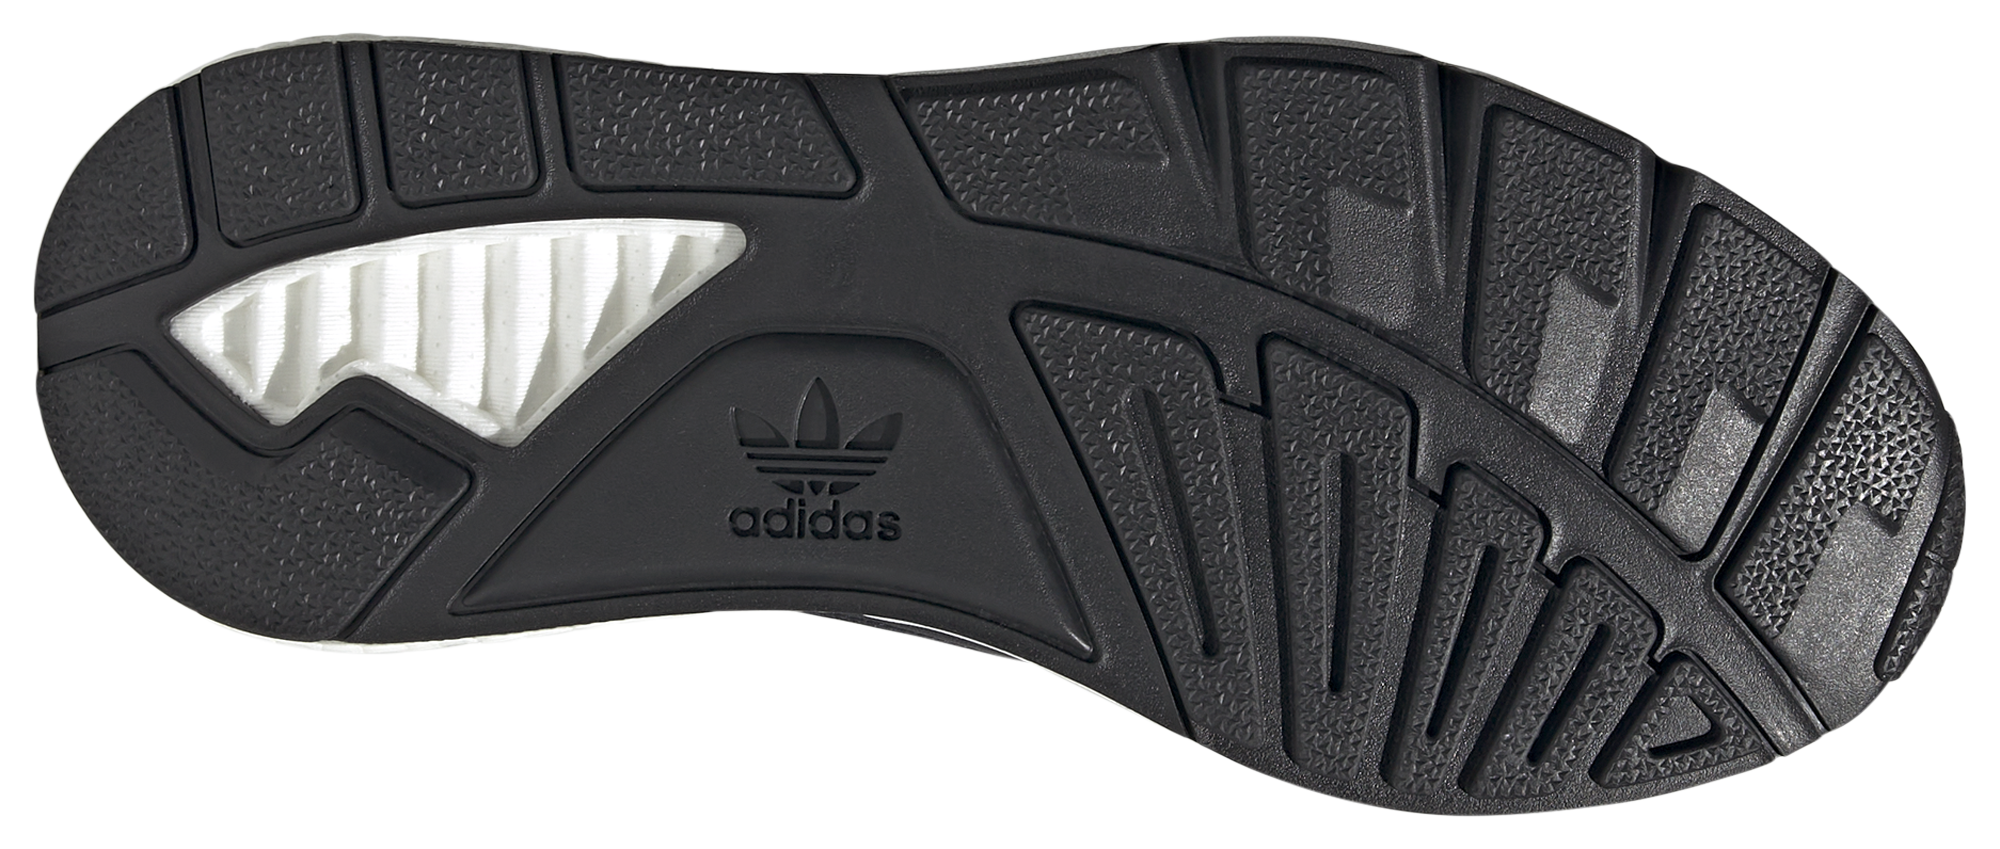 adidas Originals ZX 1K Boost 2.0 | Foot Locker